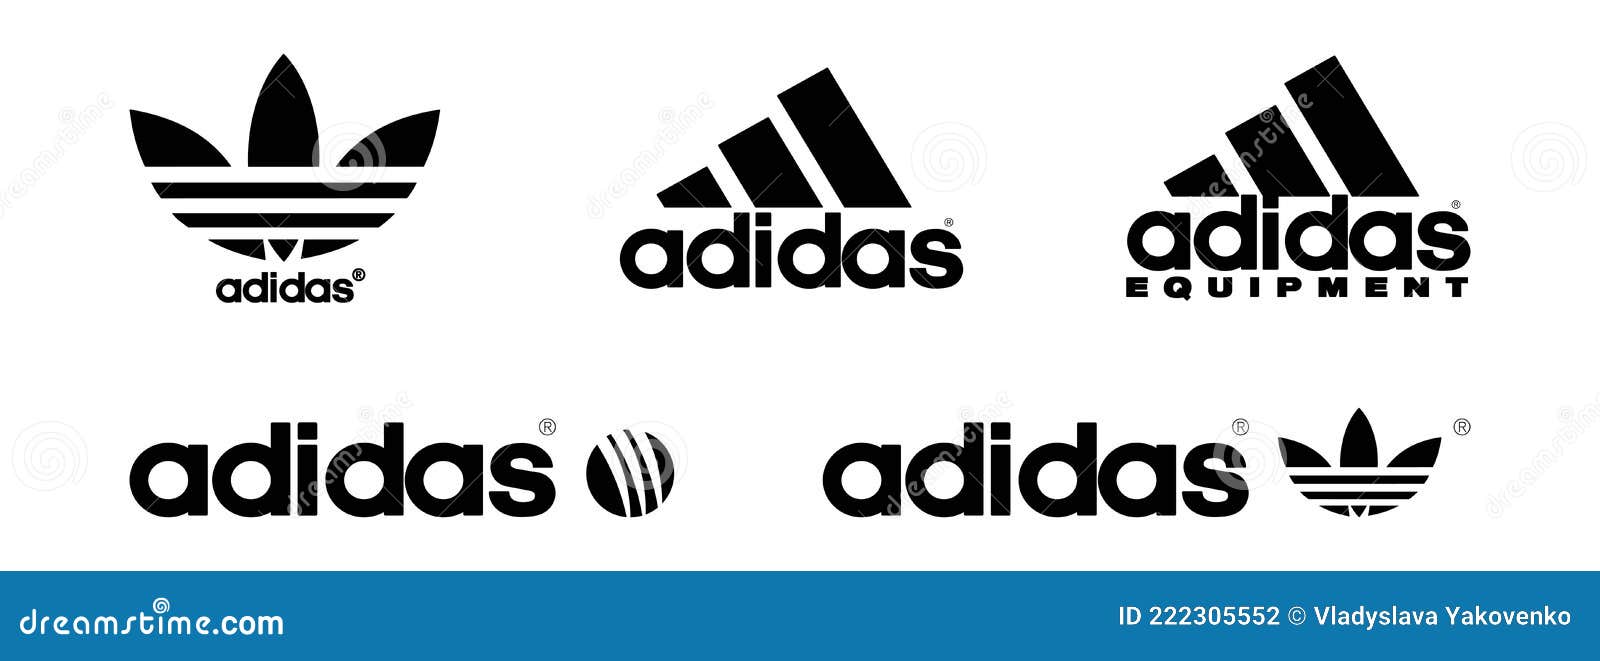 Set of Logos Adidas. Adidas Original. Sportwear Brands. Logos of Sports ...